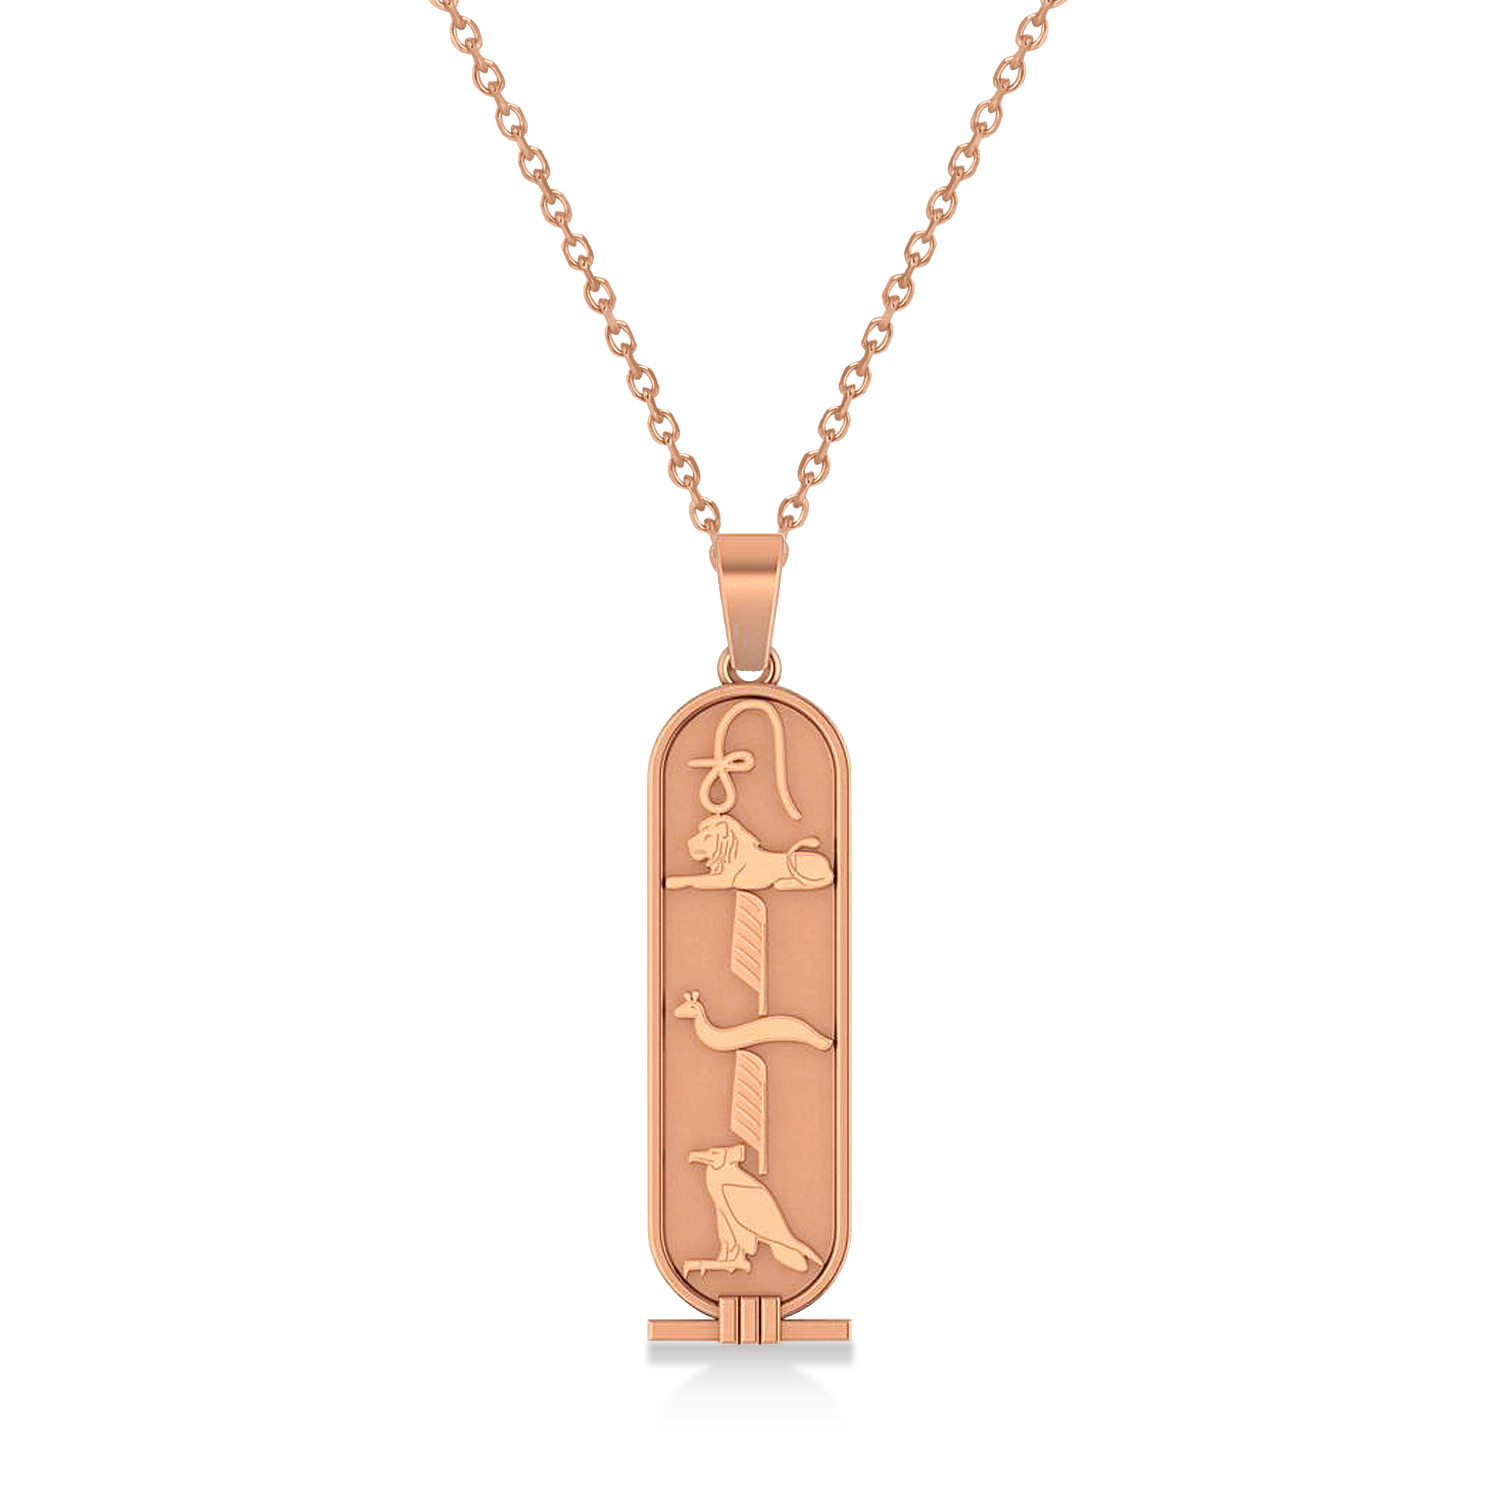 Egyptian Cartouche Pendant Necklace 14k Rose Gold from Allurez.